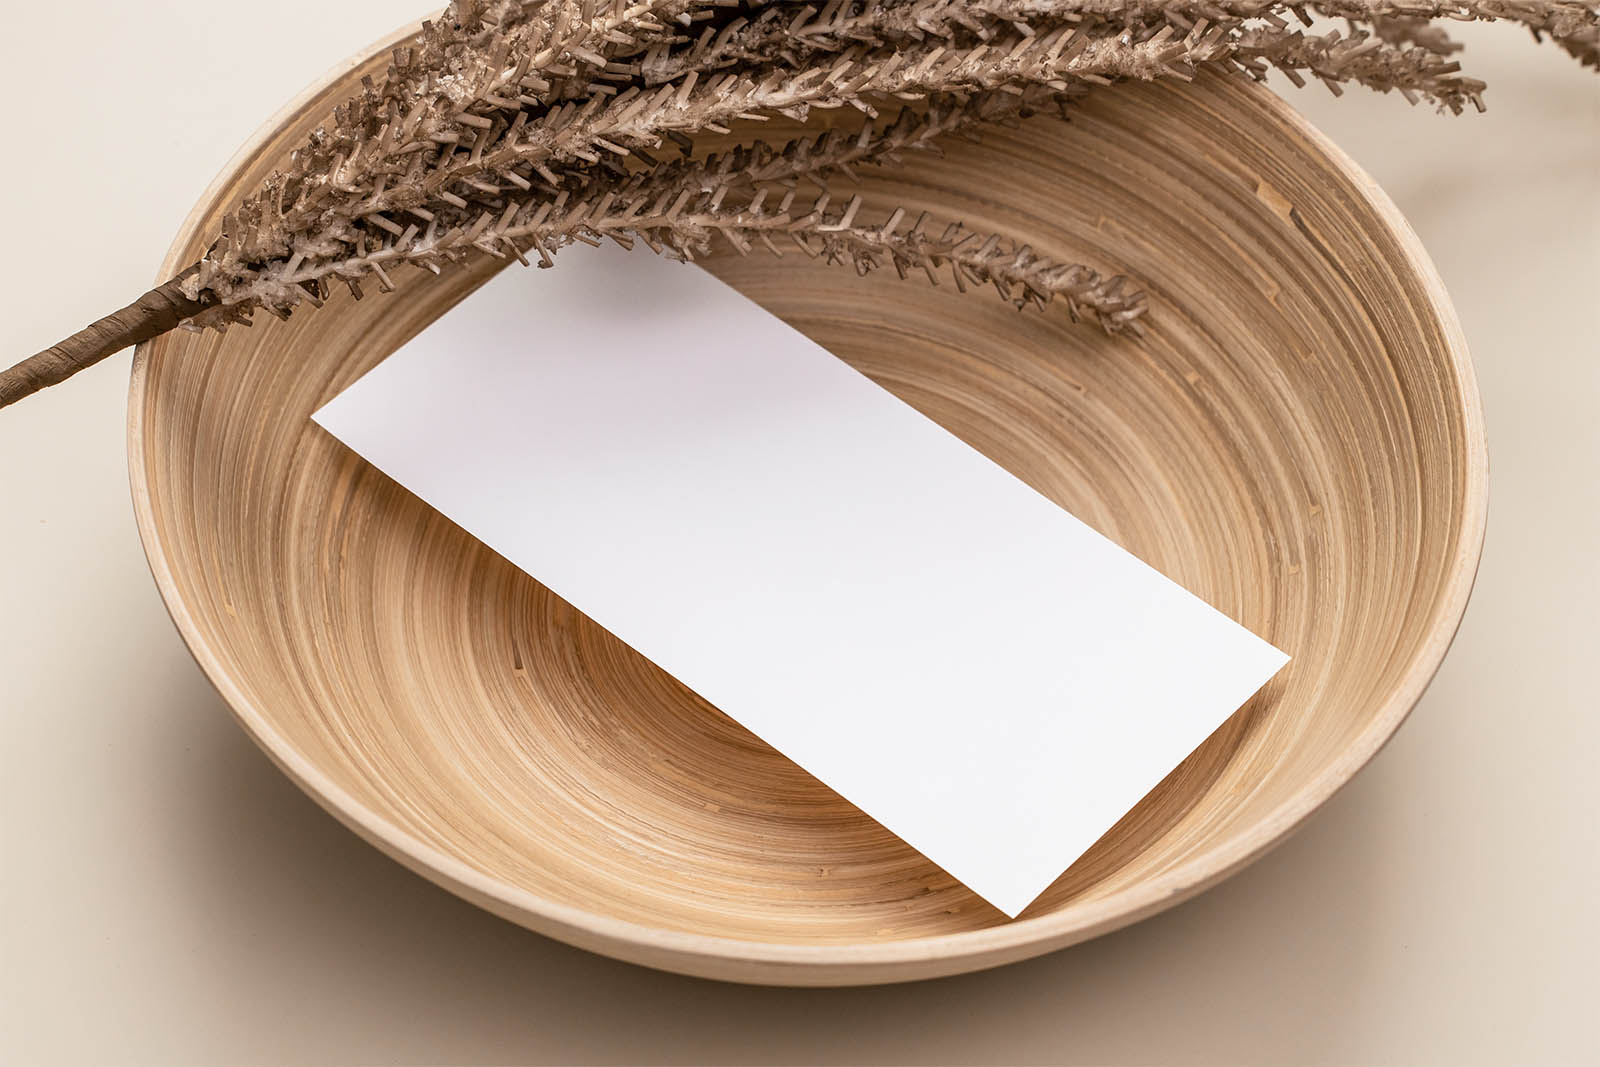 DL flyer in bamboo bowl mockup